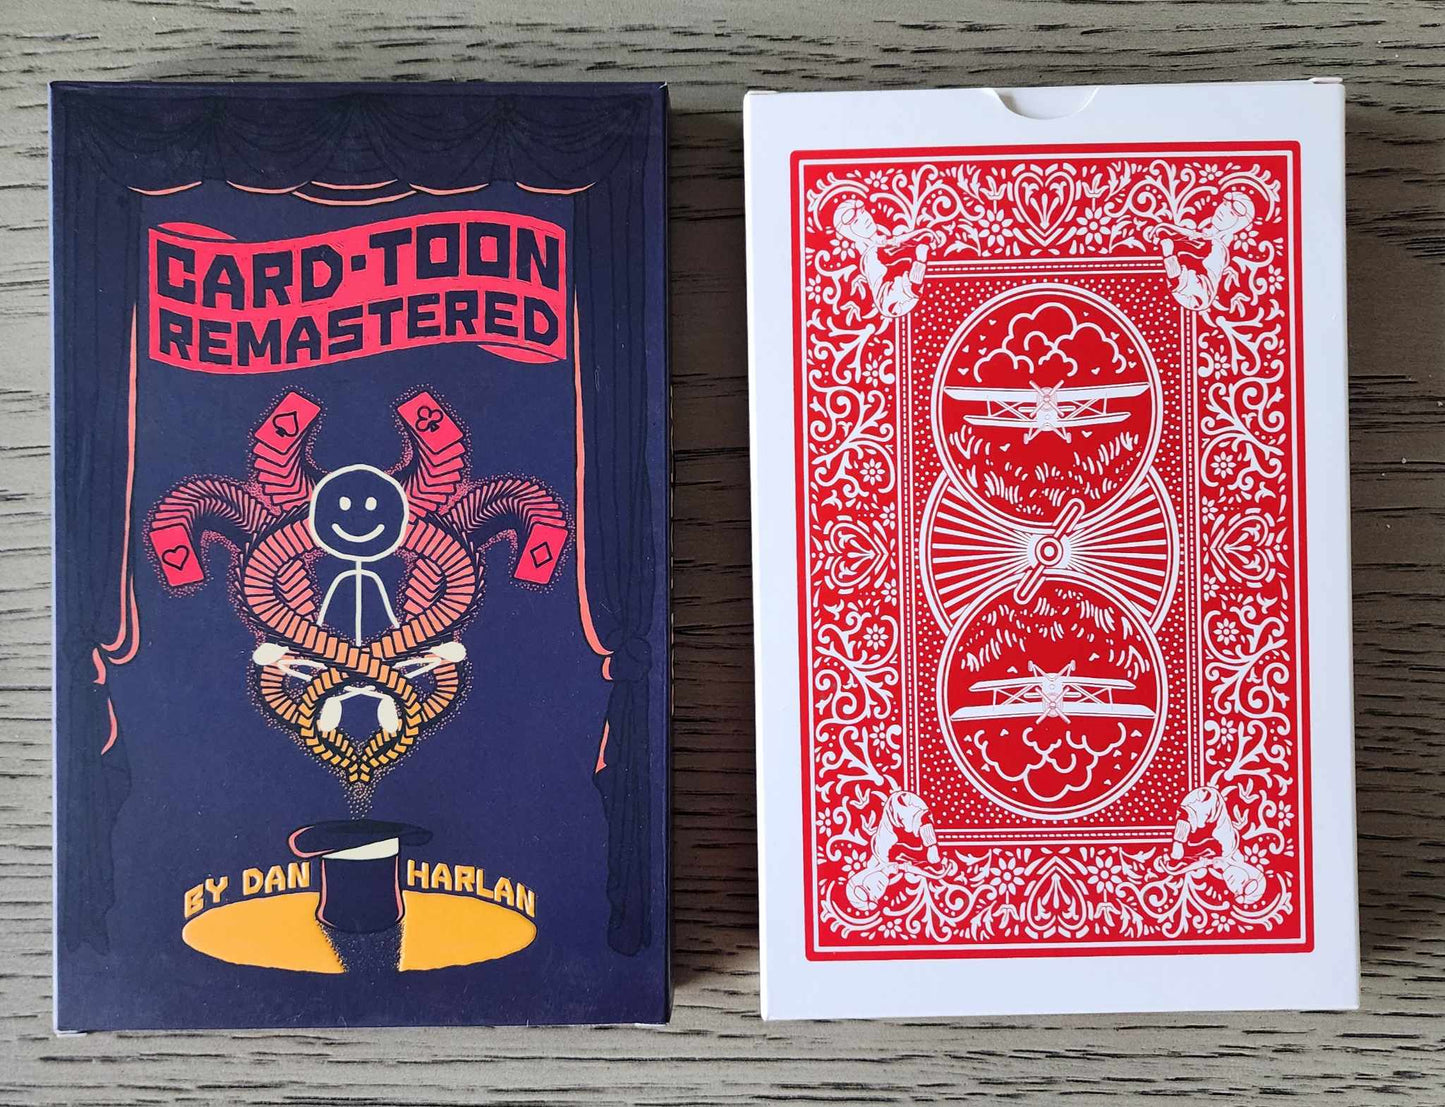 Card Toon Remastered by Dan Harlan (Jumbo)